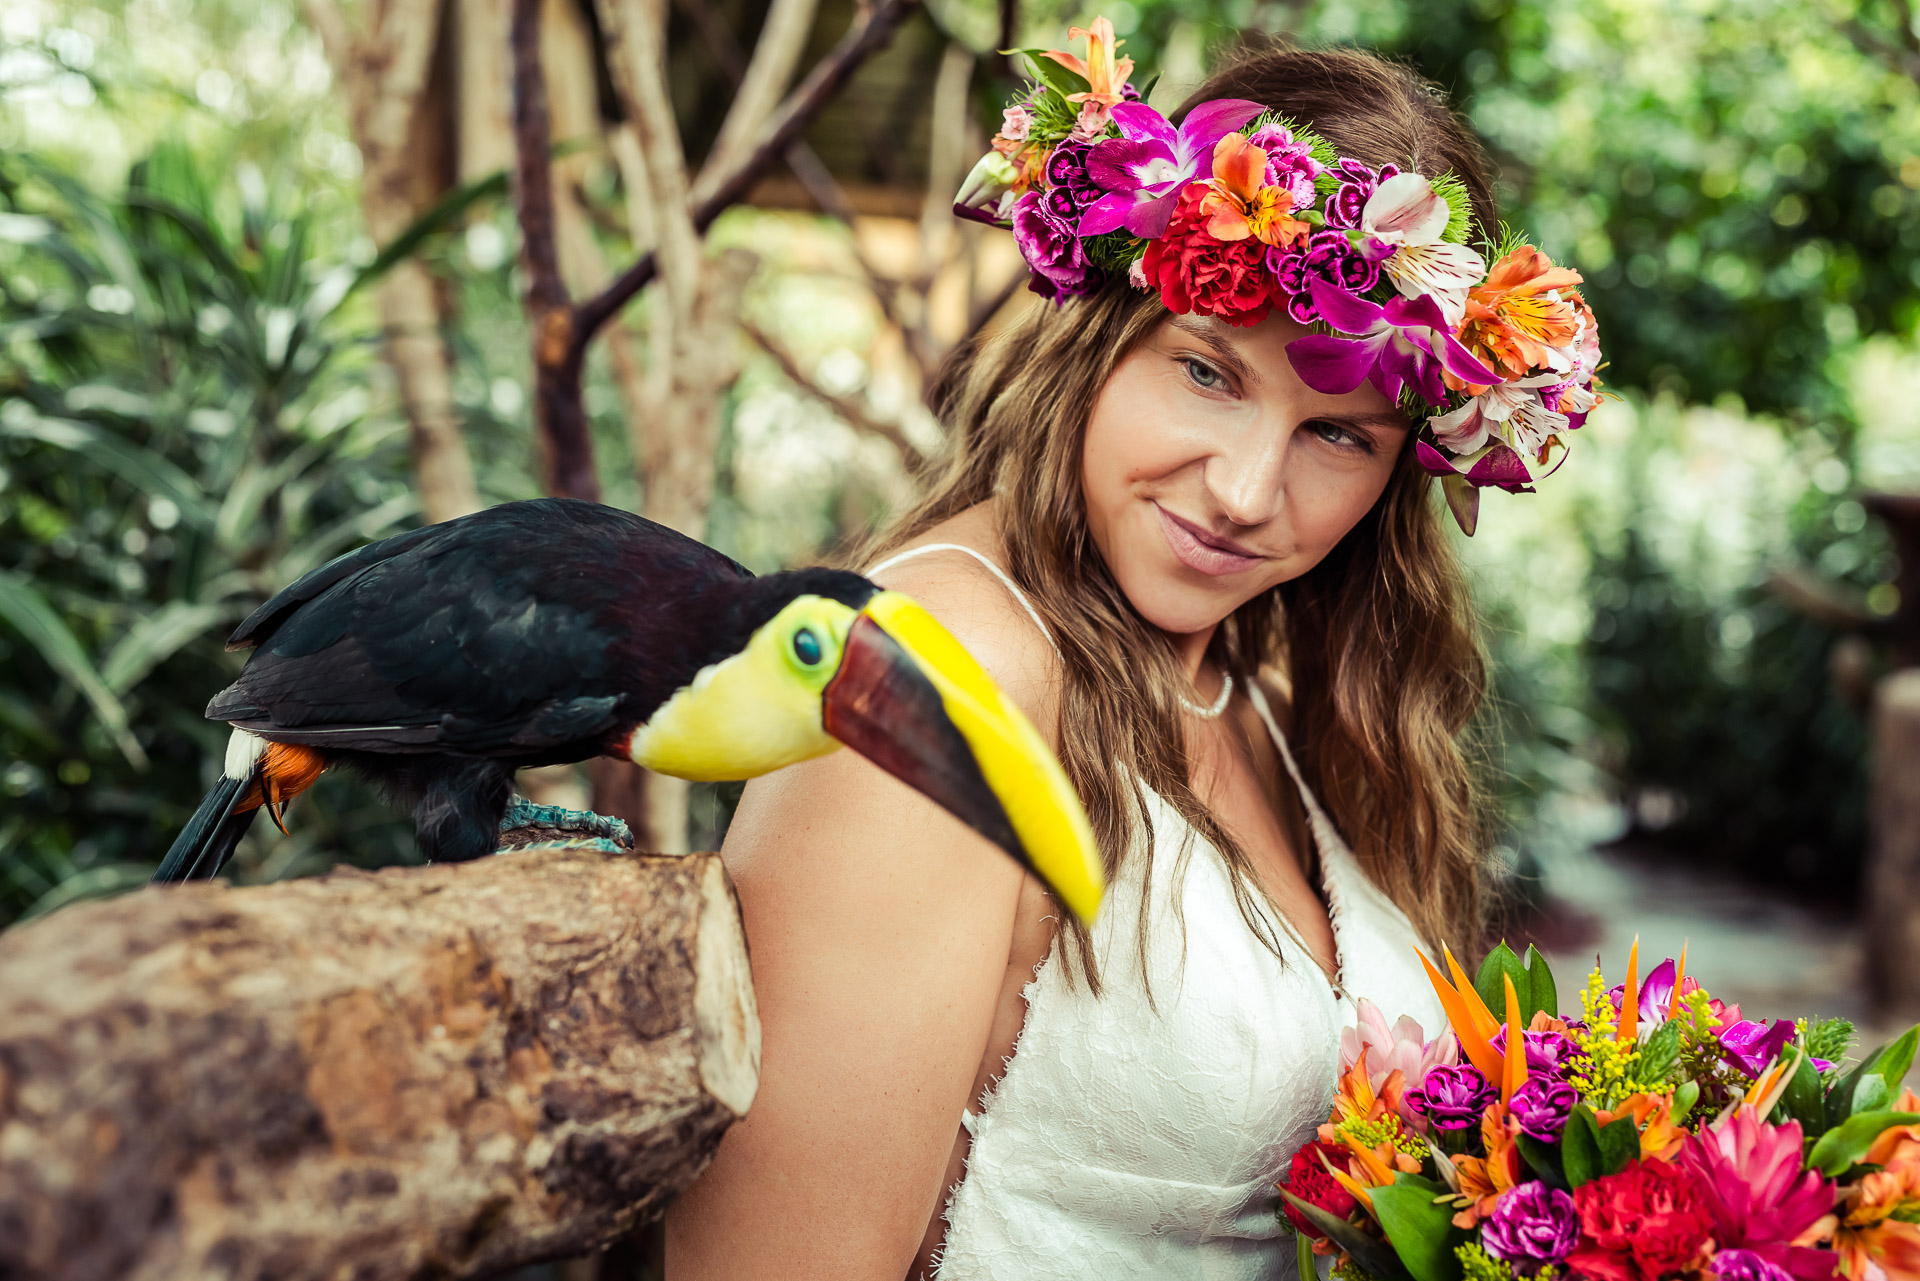 Costa Rica wedding photography